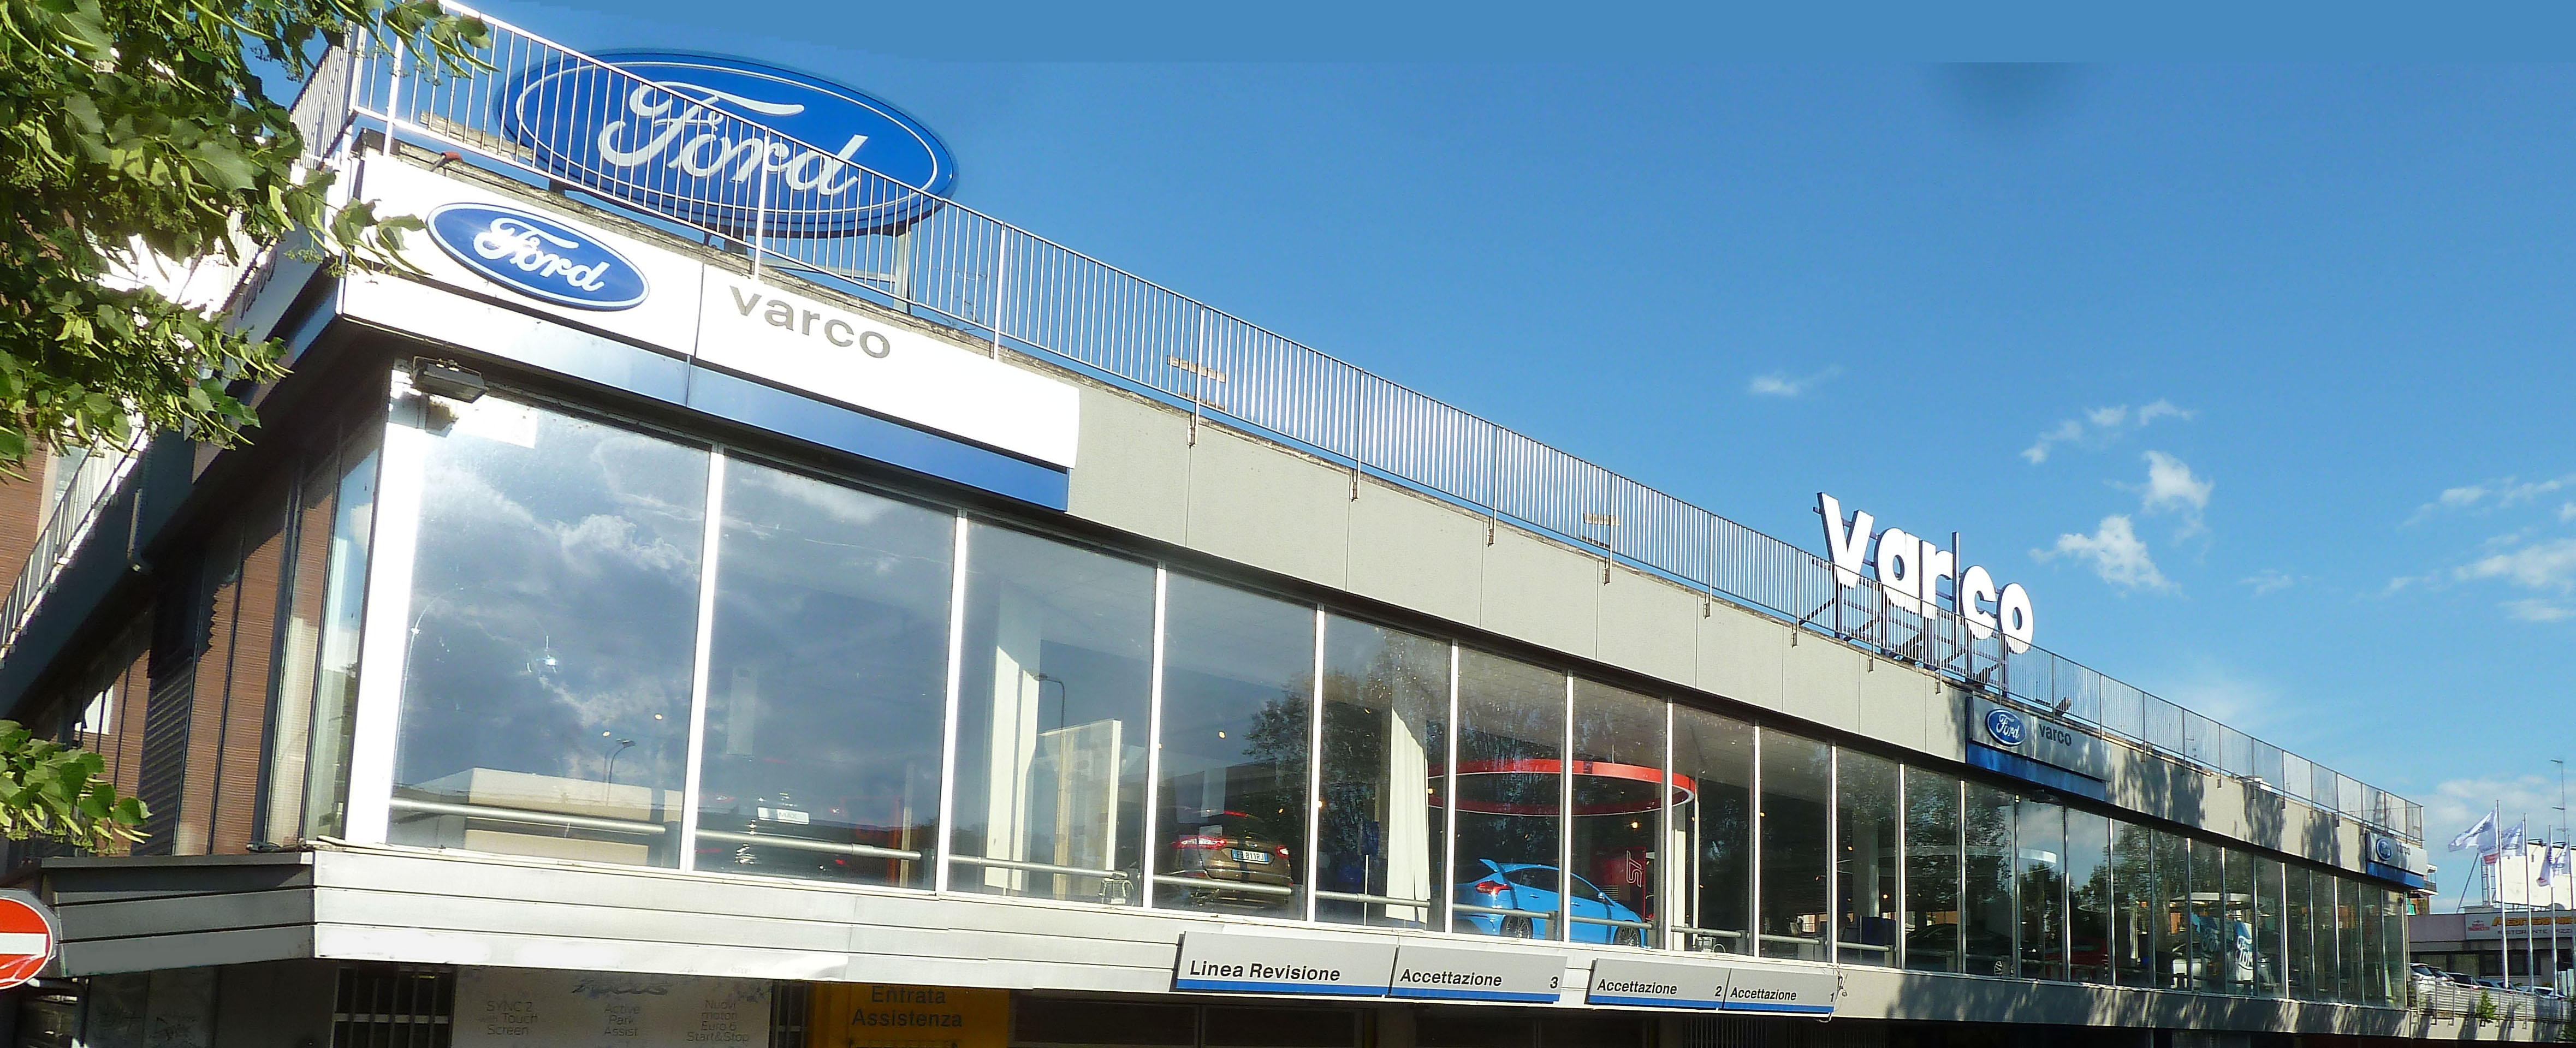 Varco Concessionaria Ford Milano -Mach-E, Kuga, Focus, Transit, 